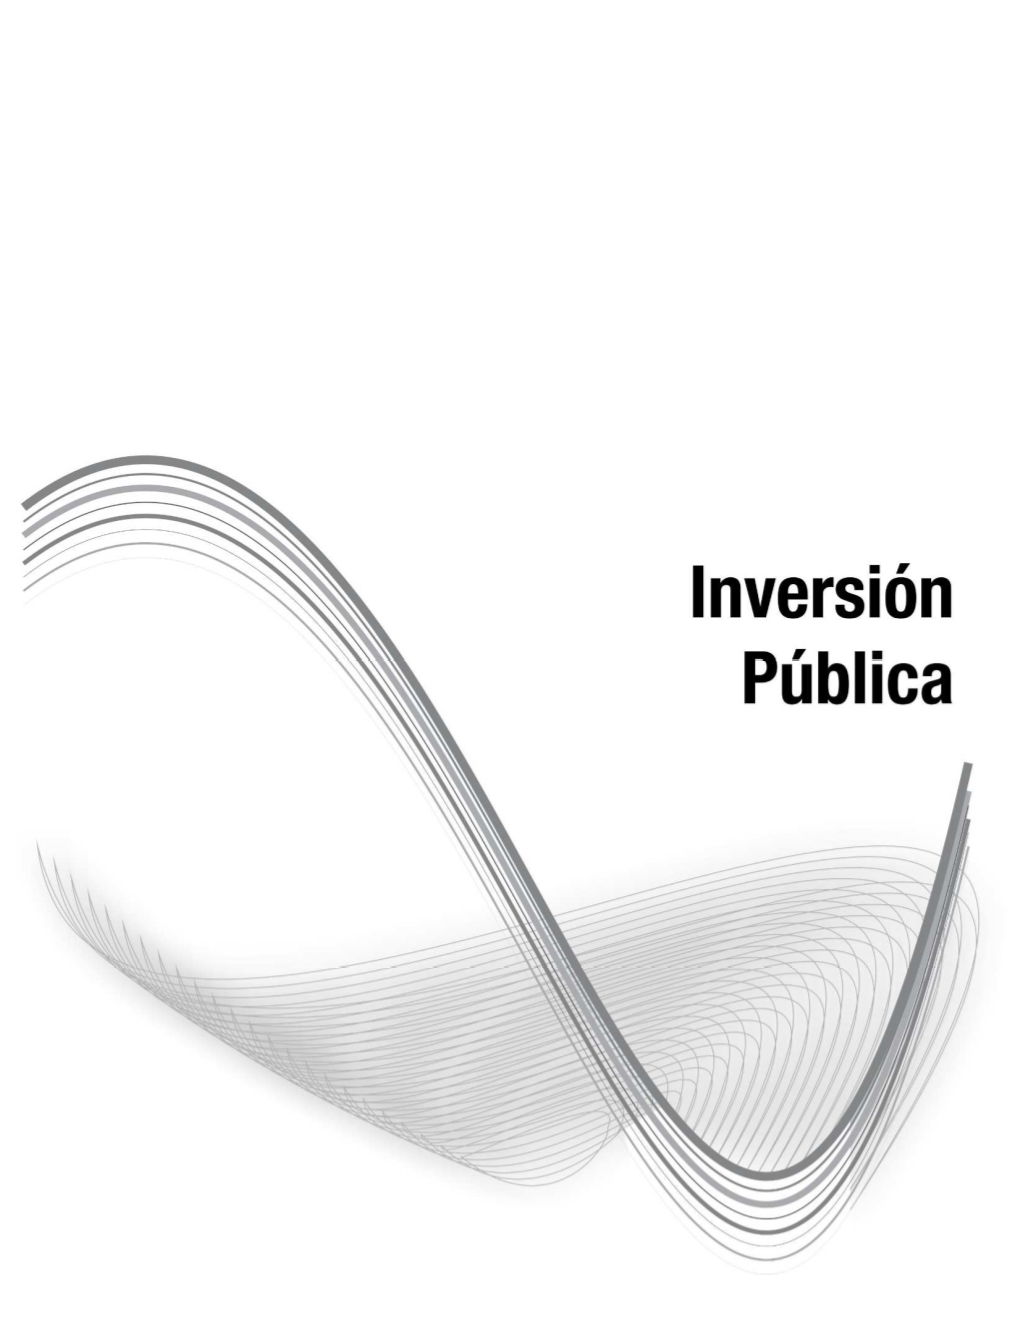 14 Inversion Publica